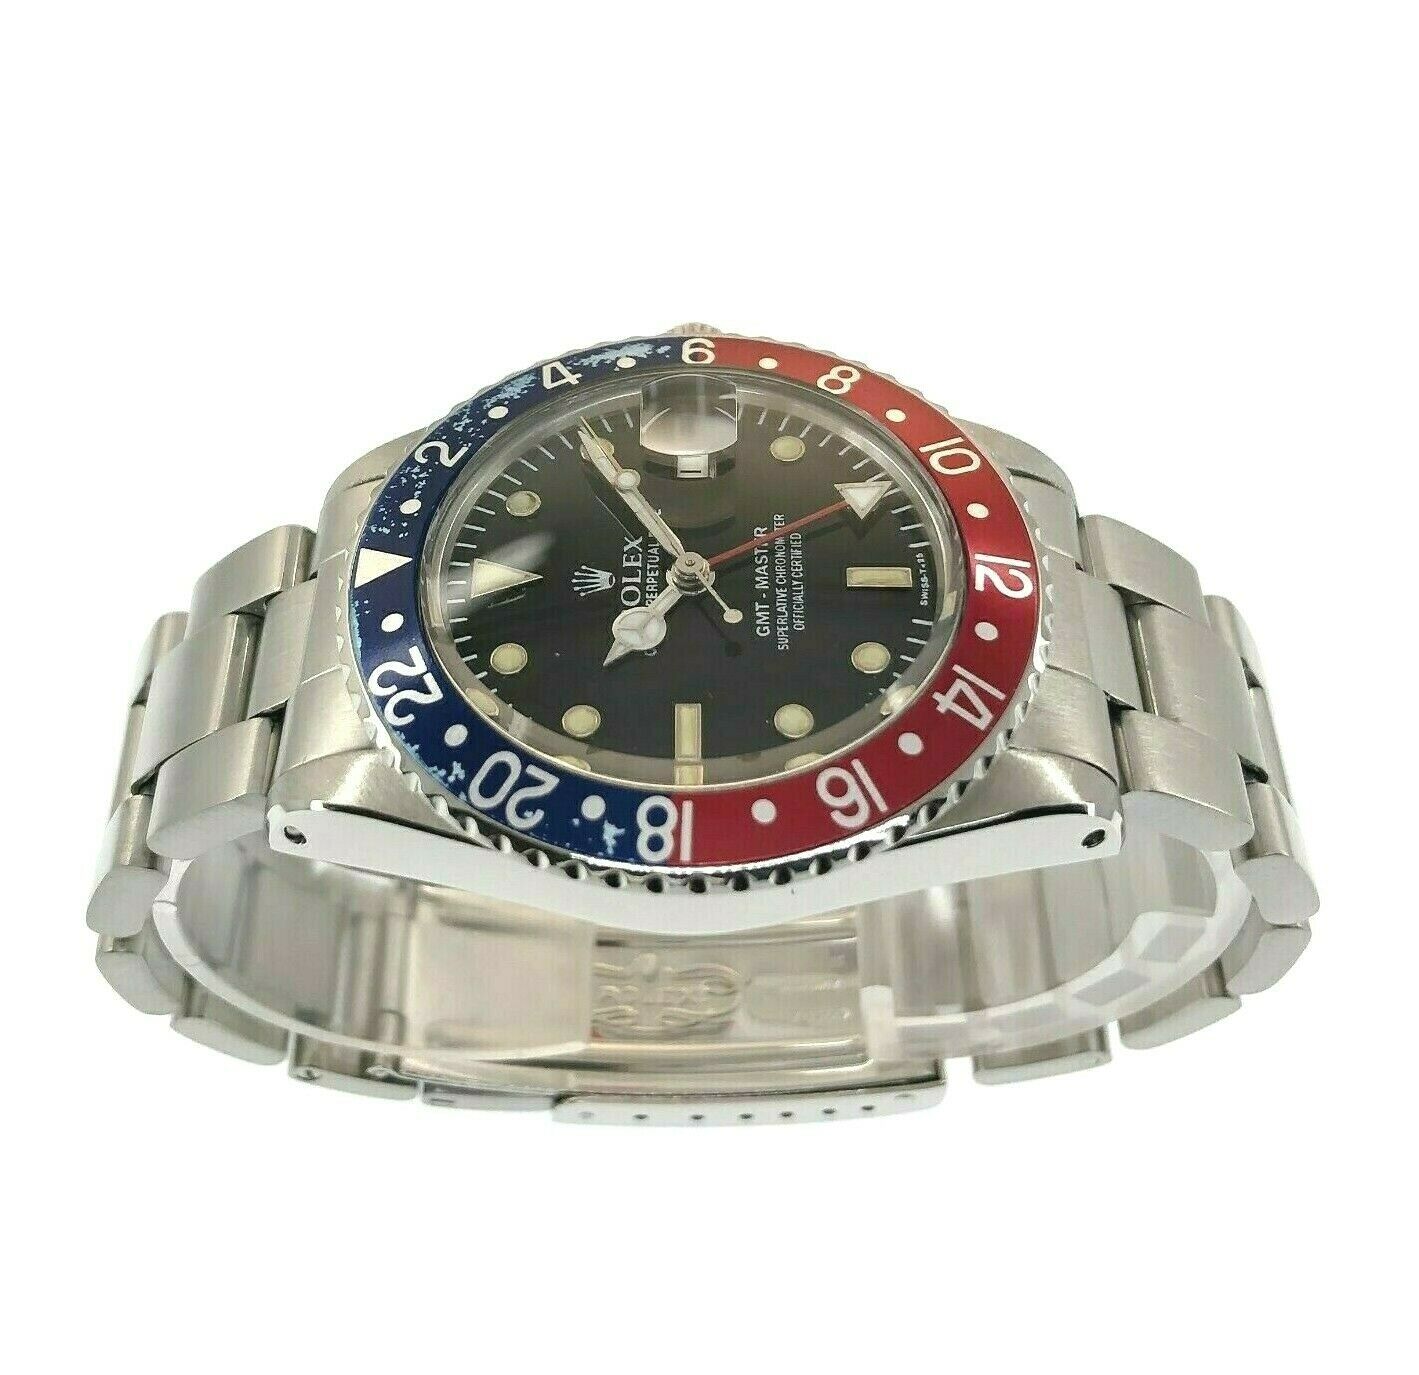 Vintage Rolex 40mm Pepsi GMT Master II Stainless Steel Watch Ref Number 16570